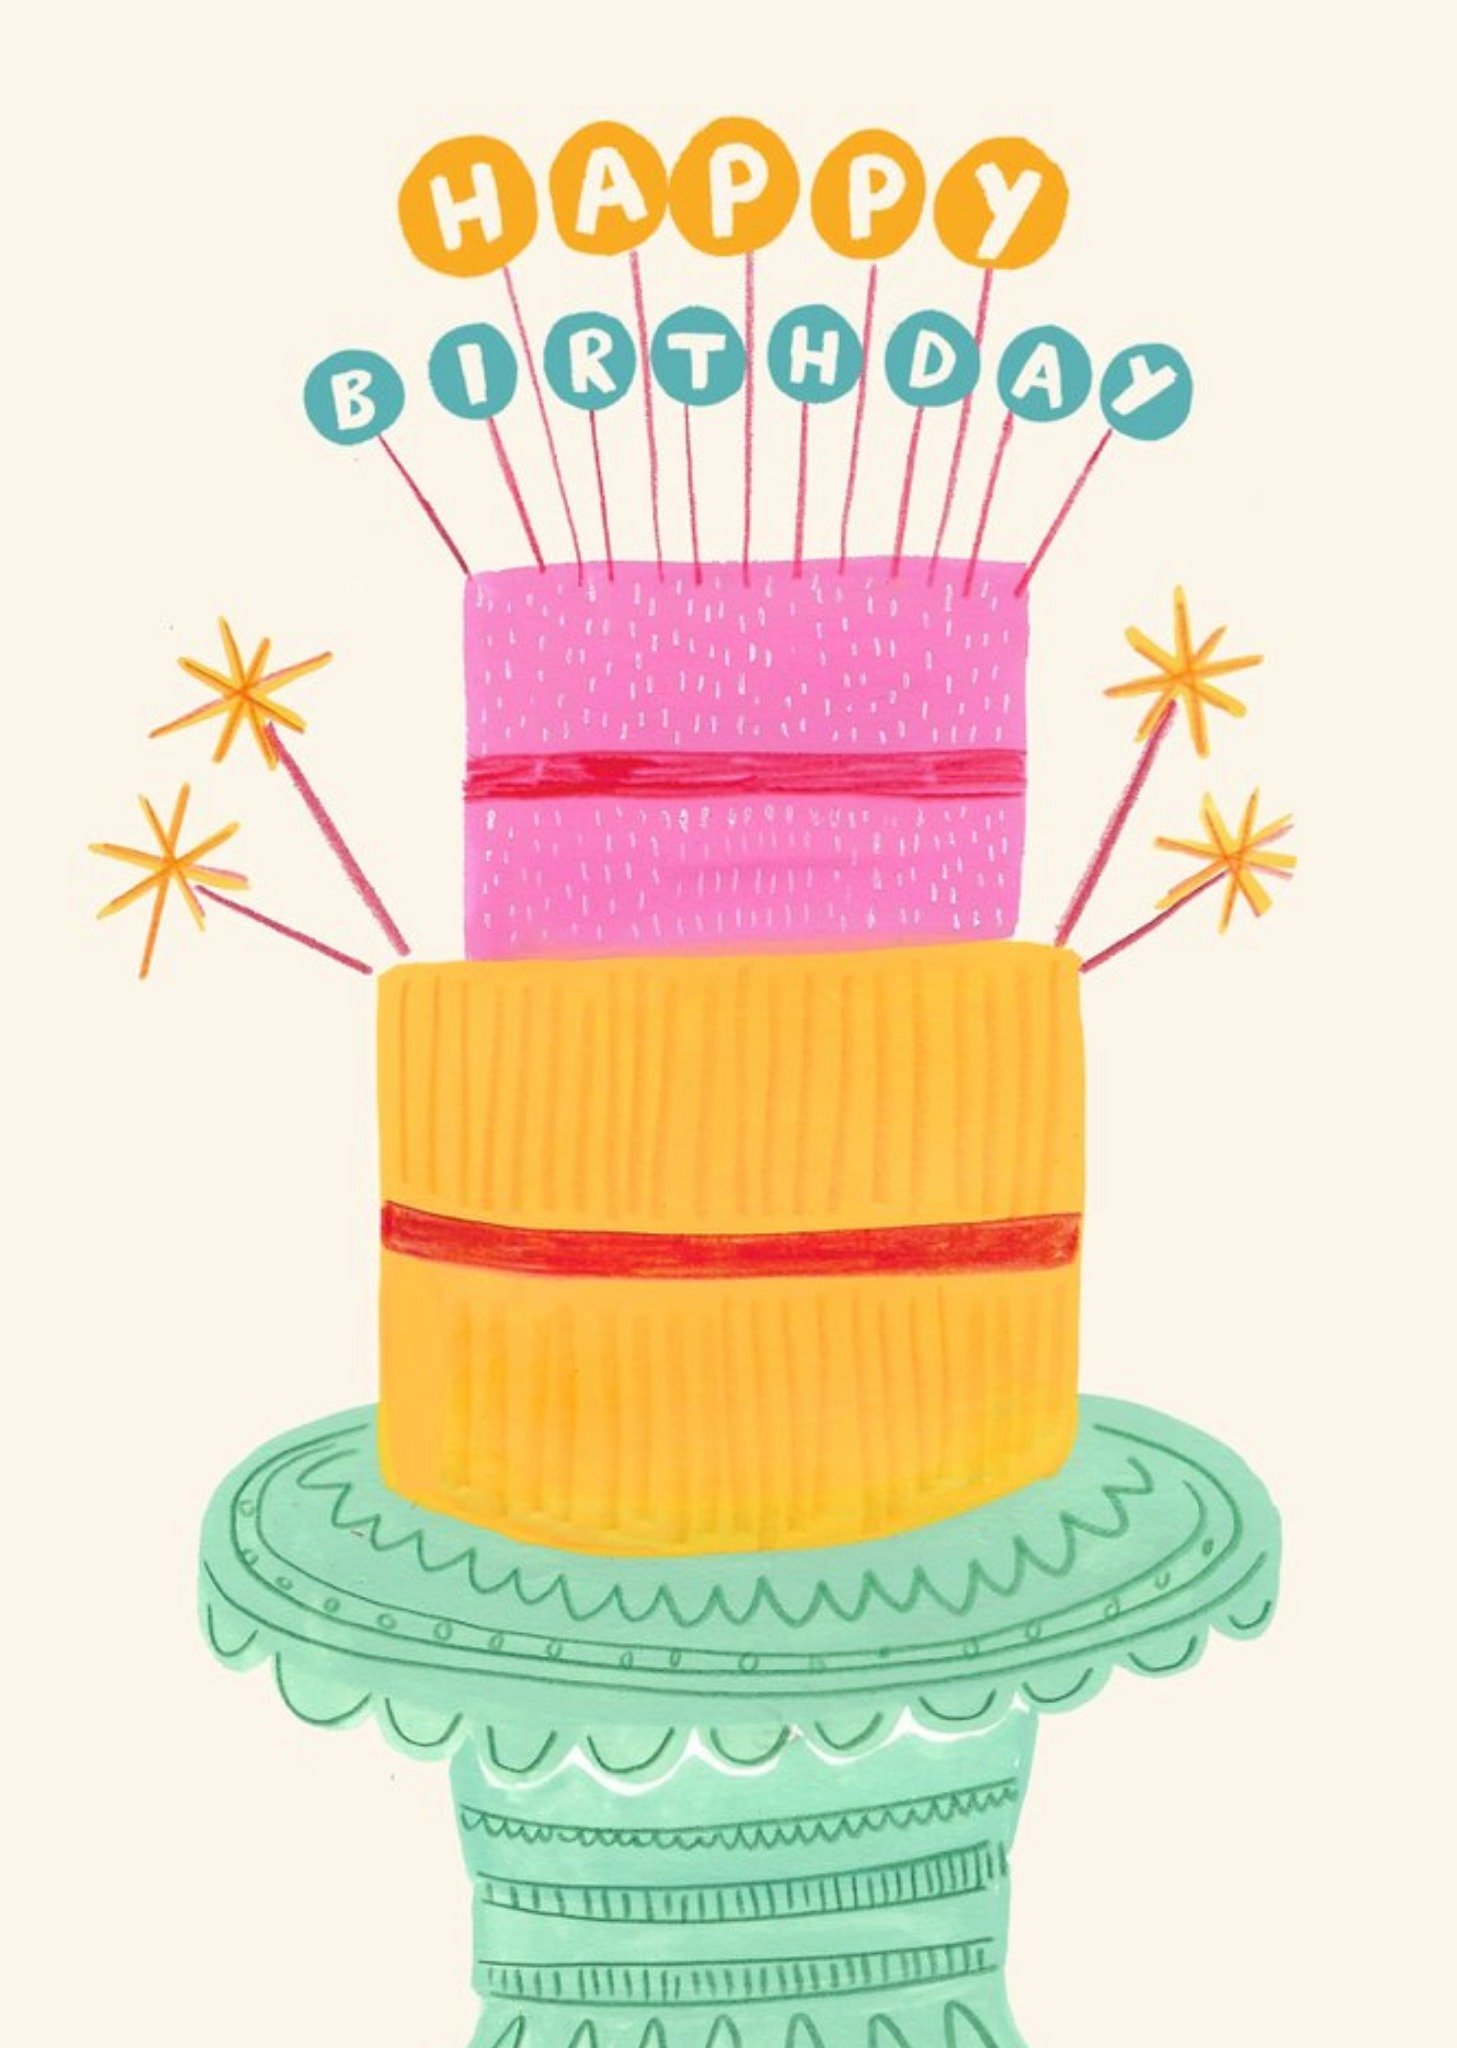 Moonpig Birthday Cake Sparklers Happy Birthday Card, Large